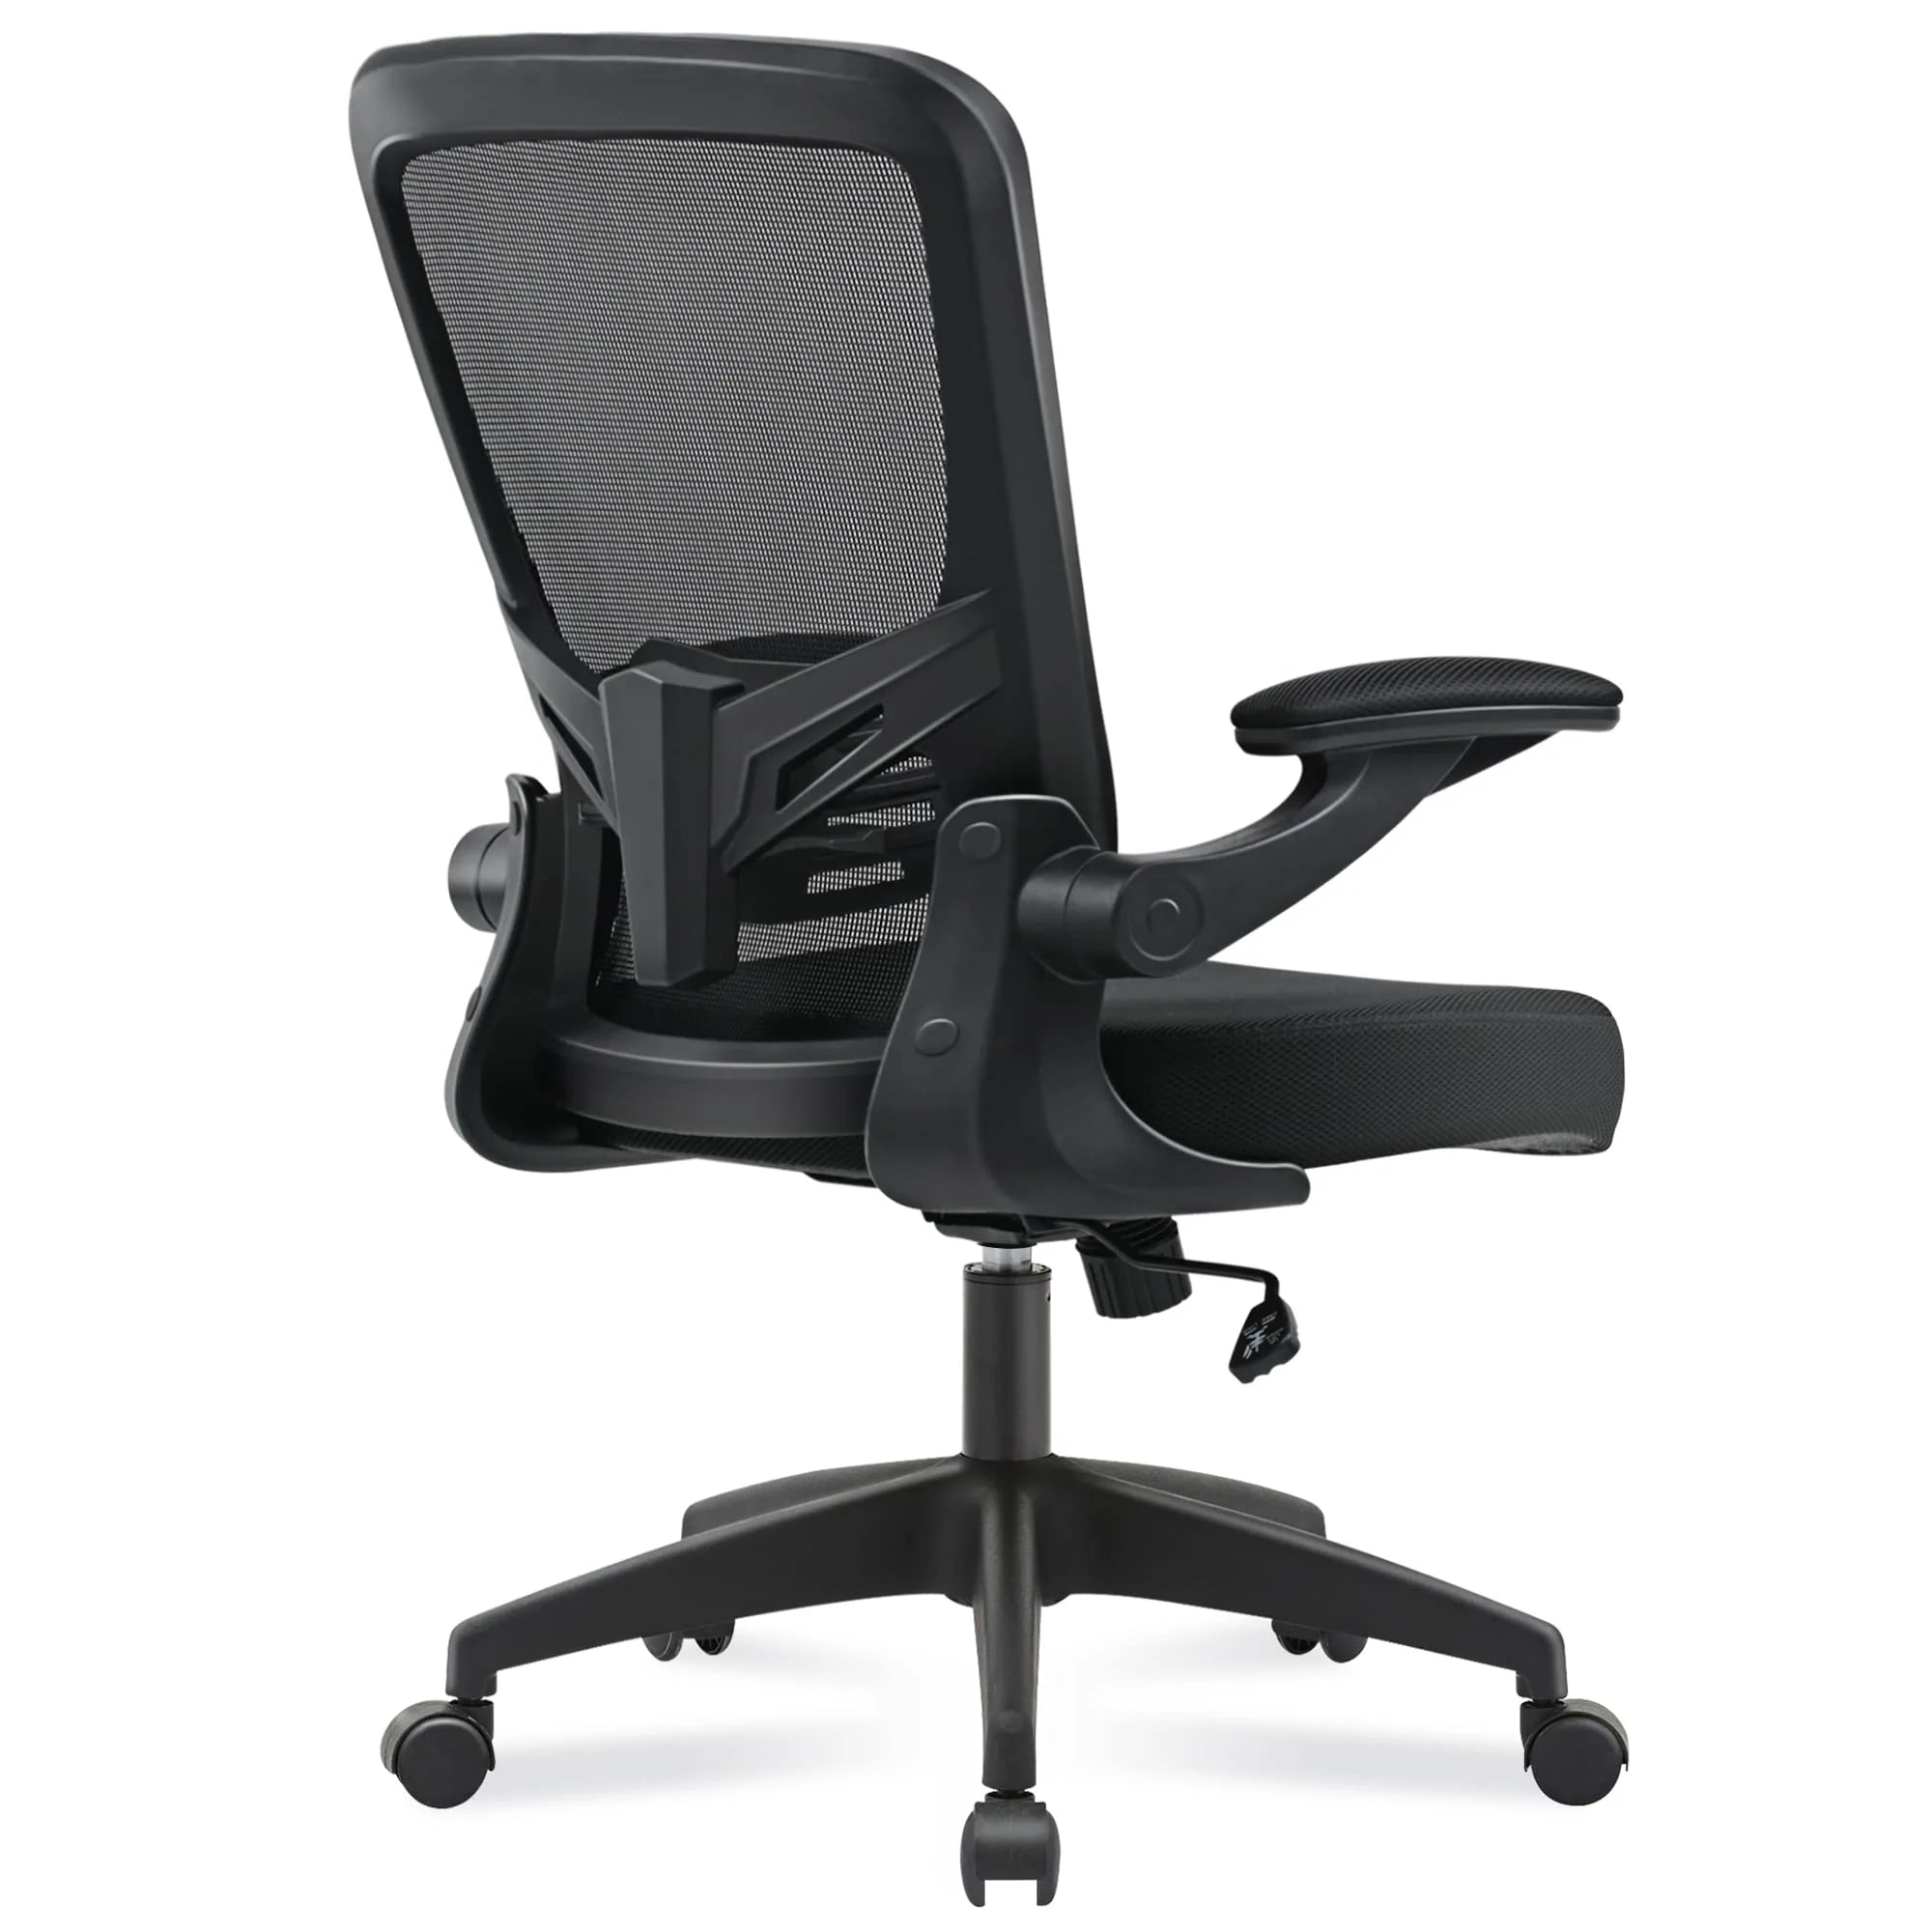 KERDOM High Back Ergonomic Office Chair - Breathable Mesh Cushion